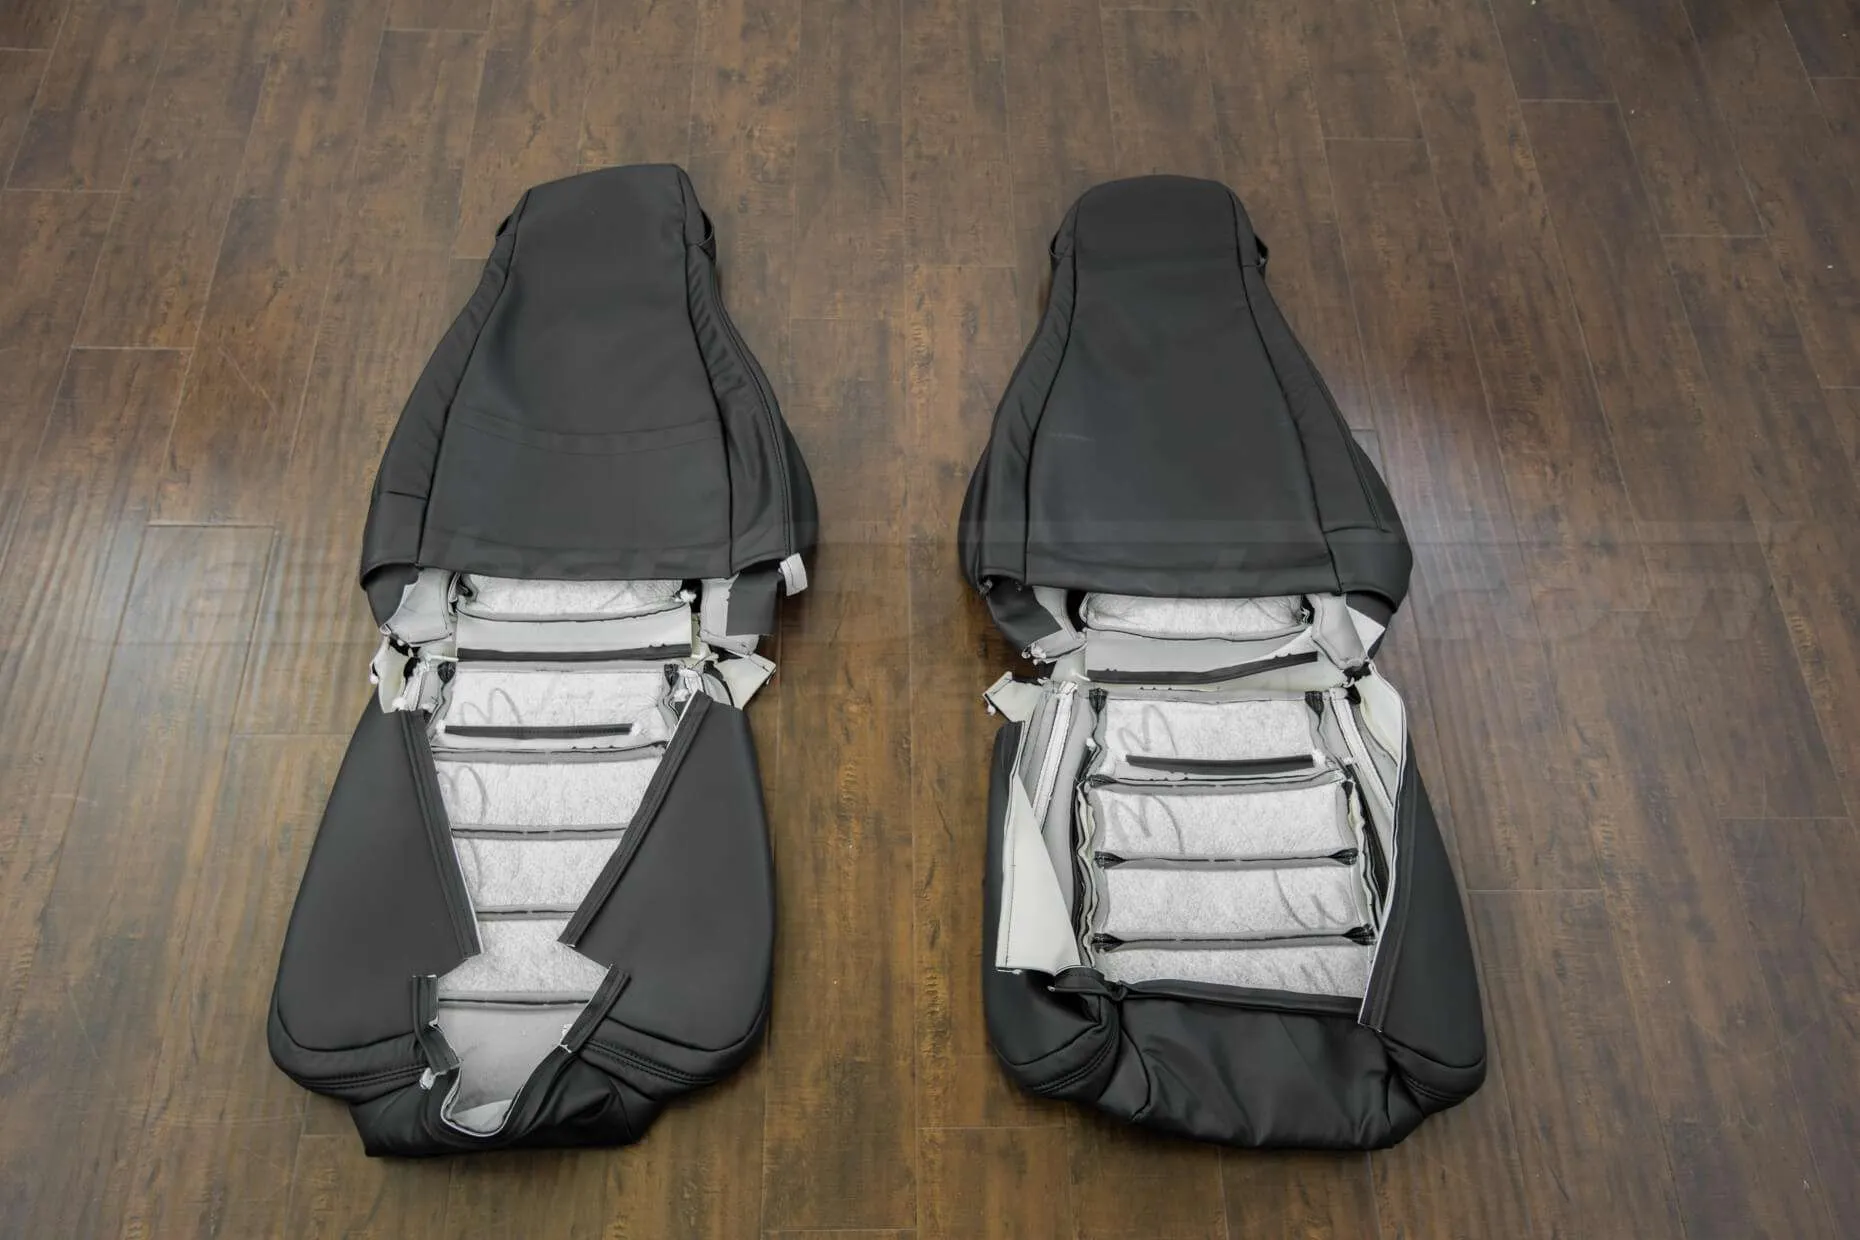 Mazda Miata upholstery kit - black - Featured Image - Back of front seats